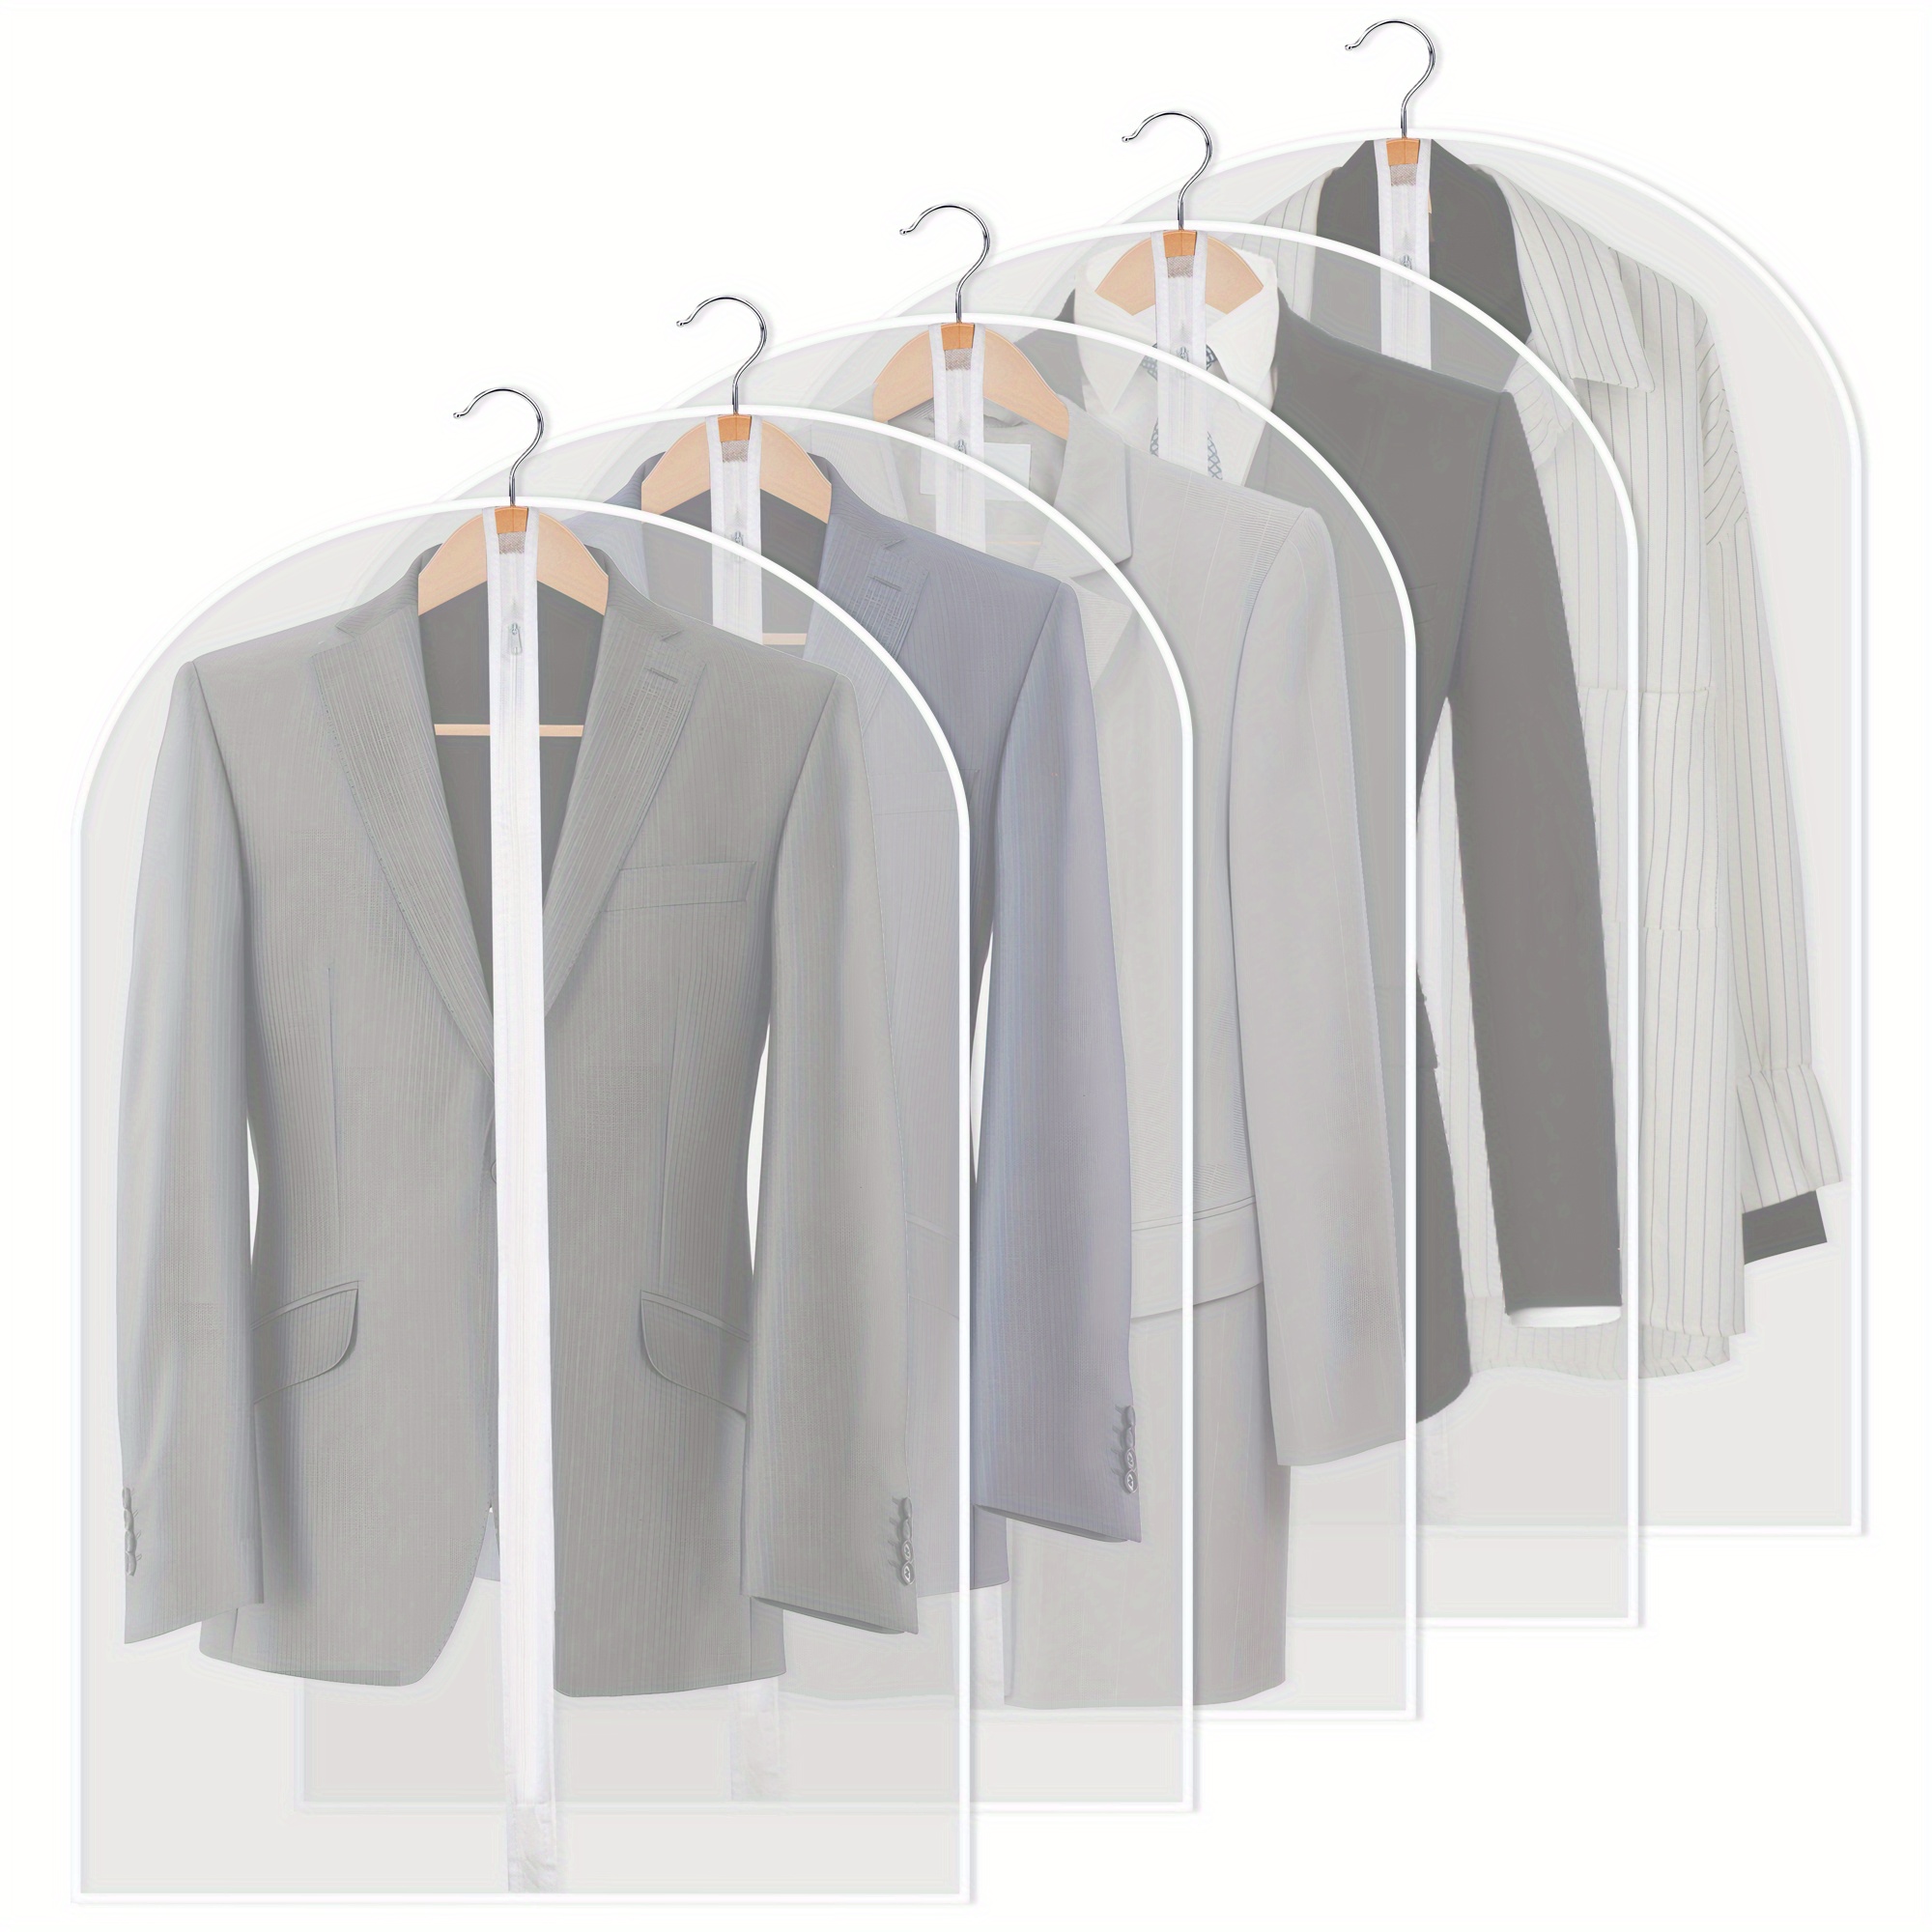 5Pack Garment Suit Bag Dust Moth Proof For Clothes Storage